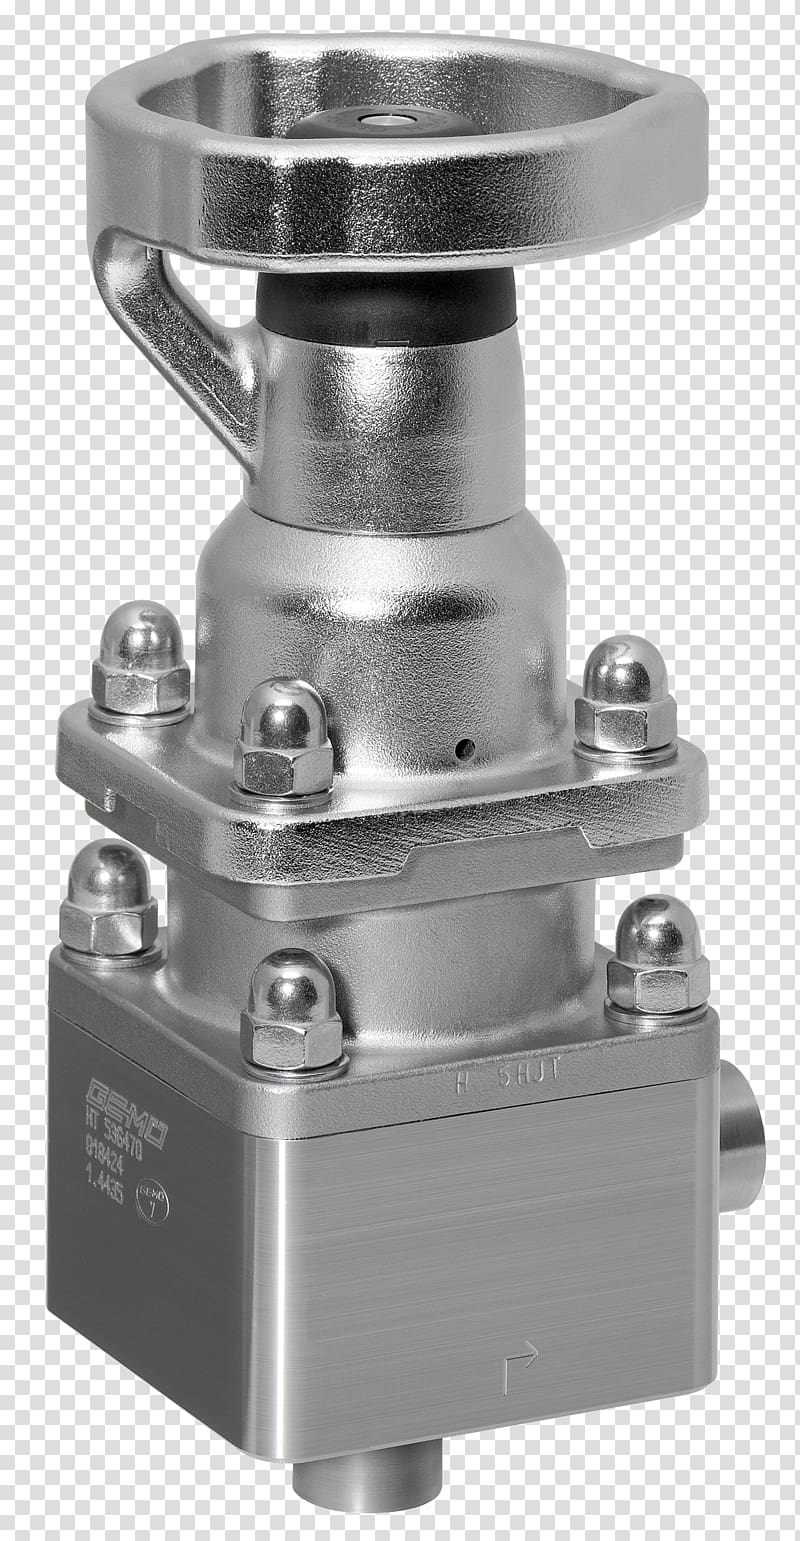 Globe valve Control valves GEMÜ Gebr. Müller Apparatebau GmbH & Co. KG Diaphragm valve, others transparent background PNG clipart